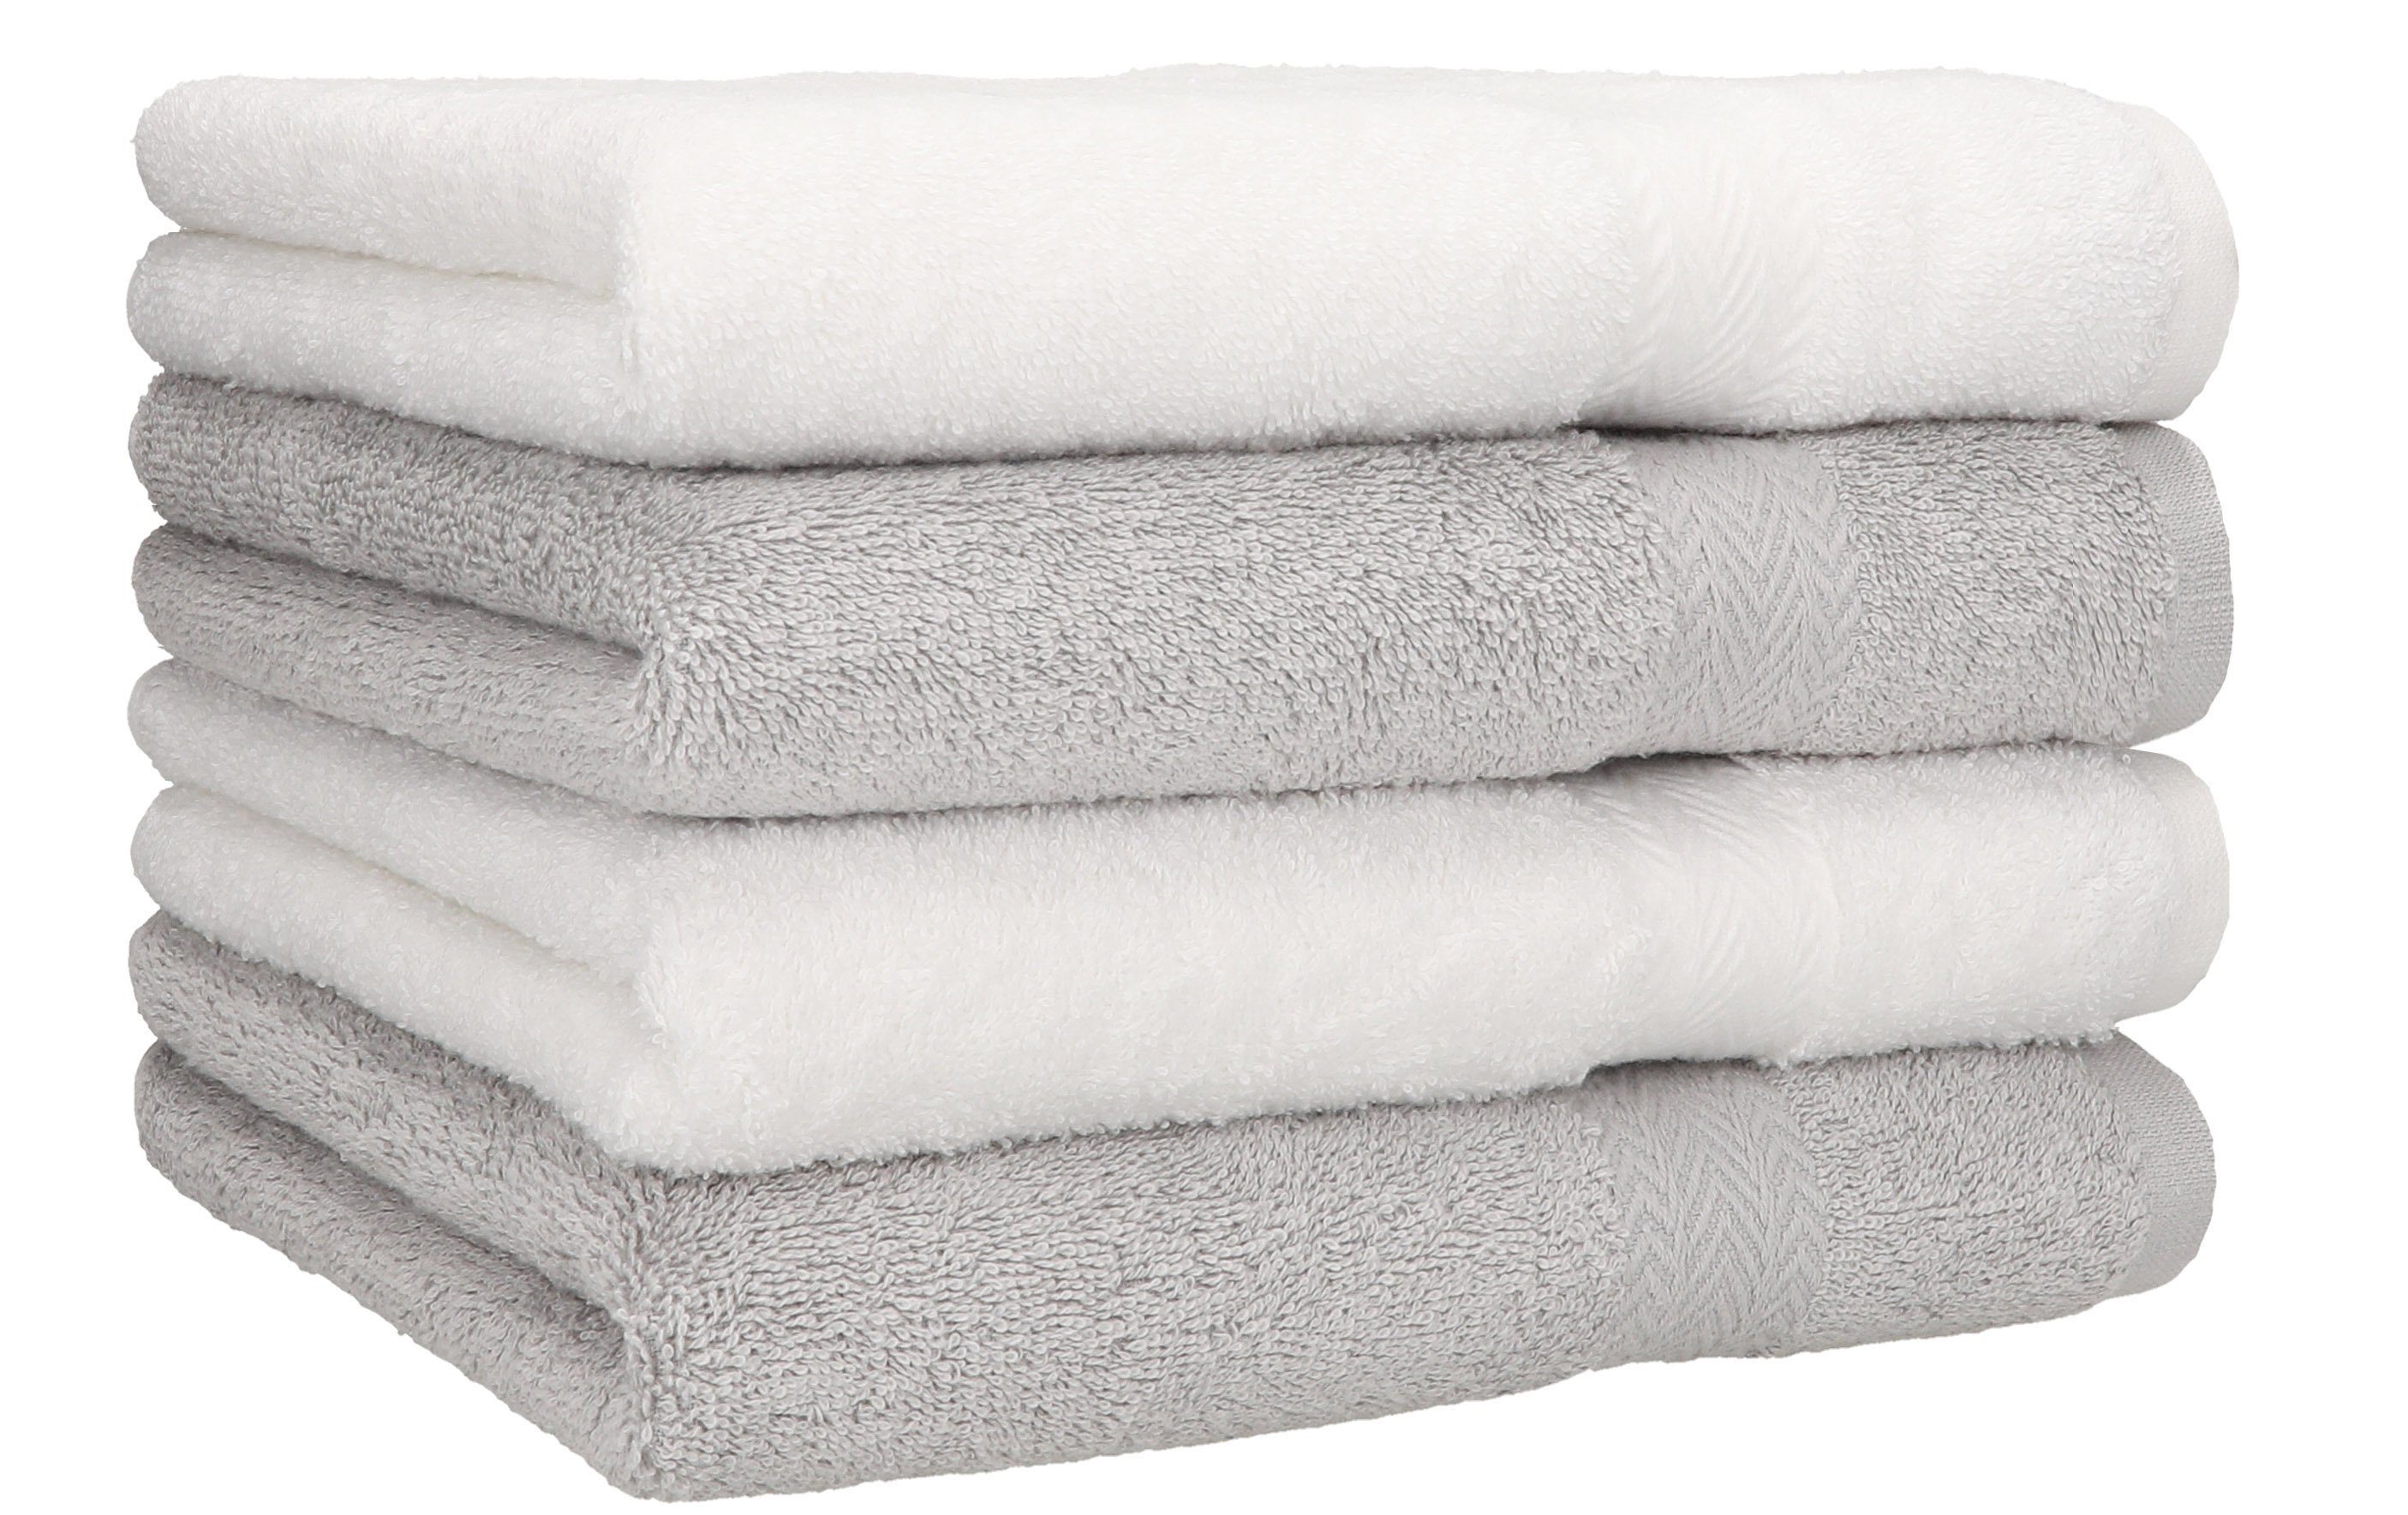 Betz Handtücher 4 Stück Handtücher Premium 4 Handtücher Farbe weiß und silbergrau, 100% Baumwolle